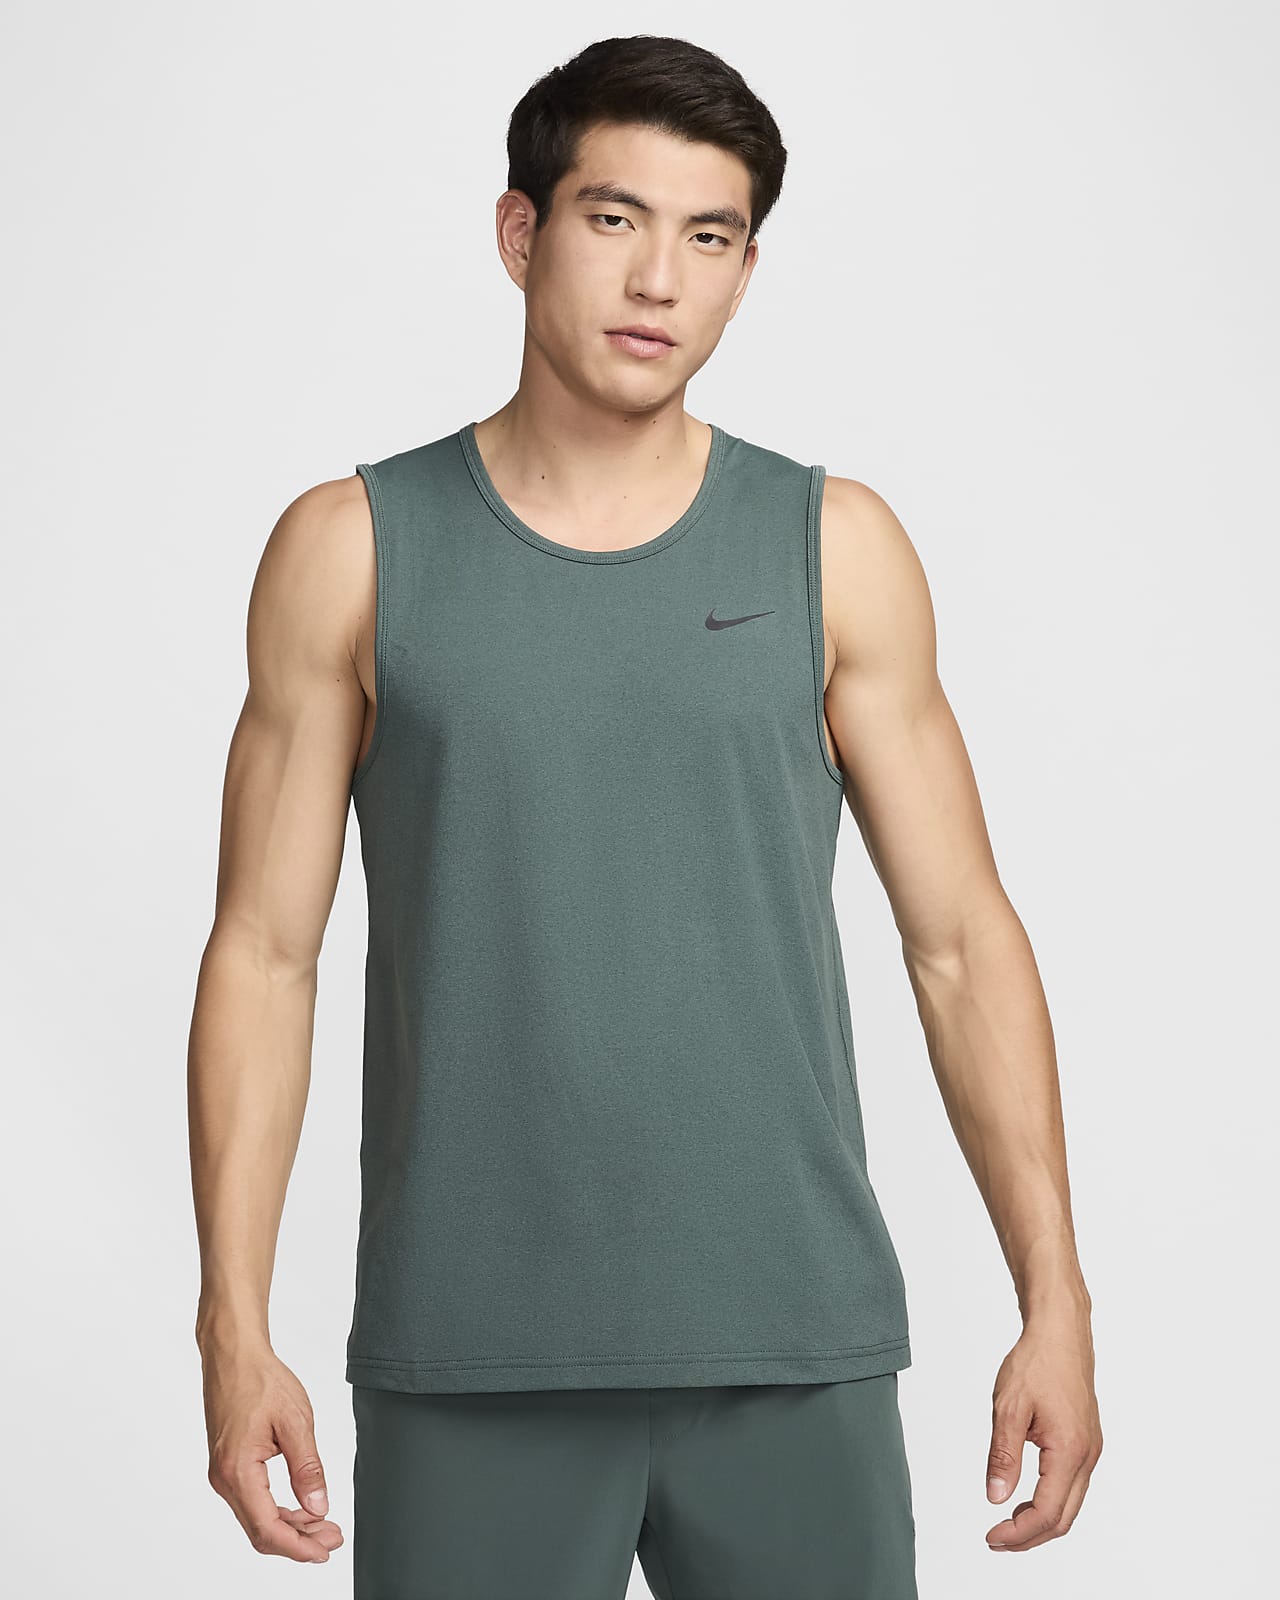 Nike Dri-FIT Hyverse Men's Sleeveless Fitness Tank Top